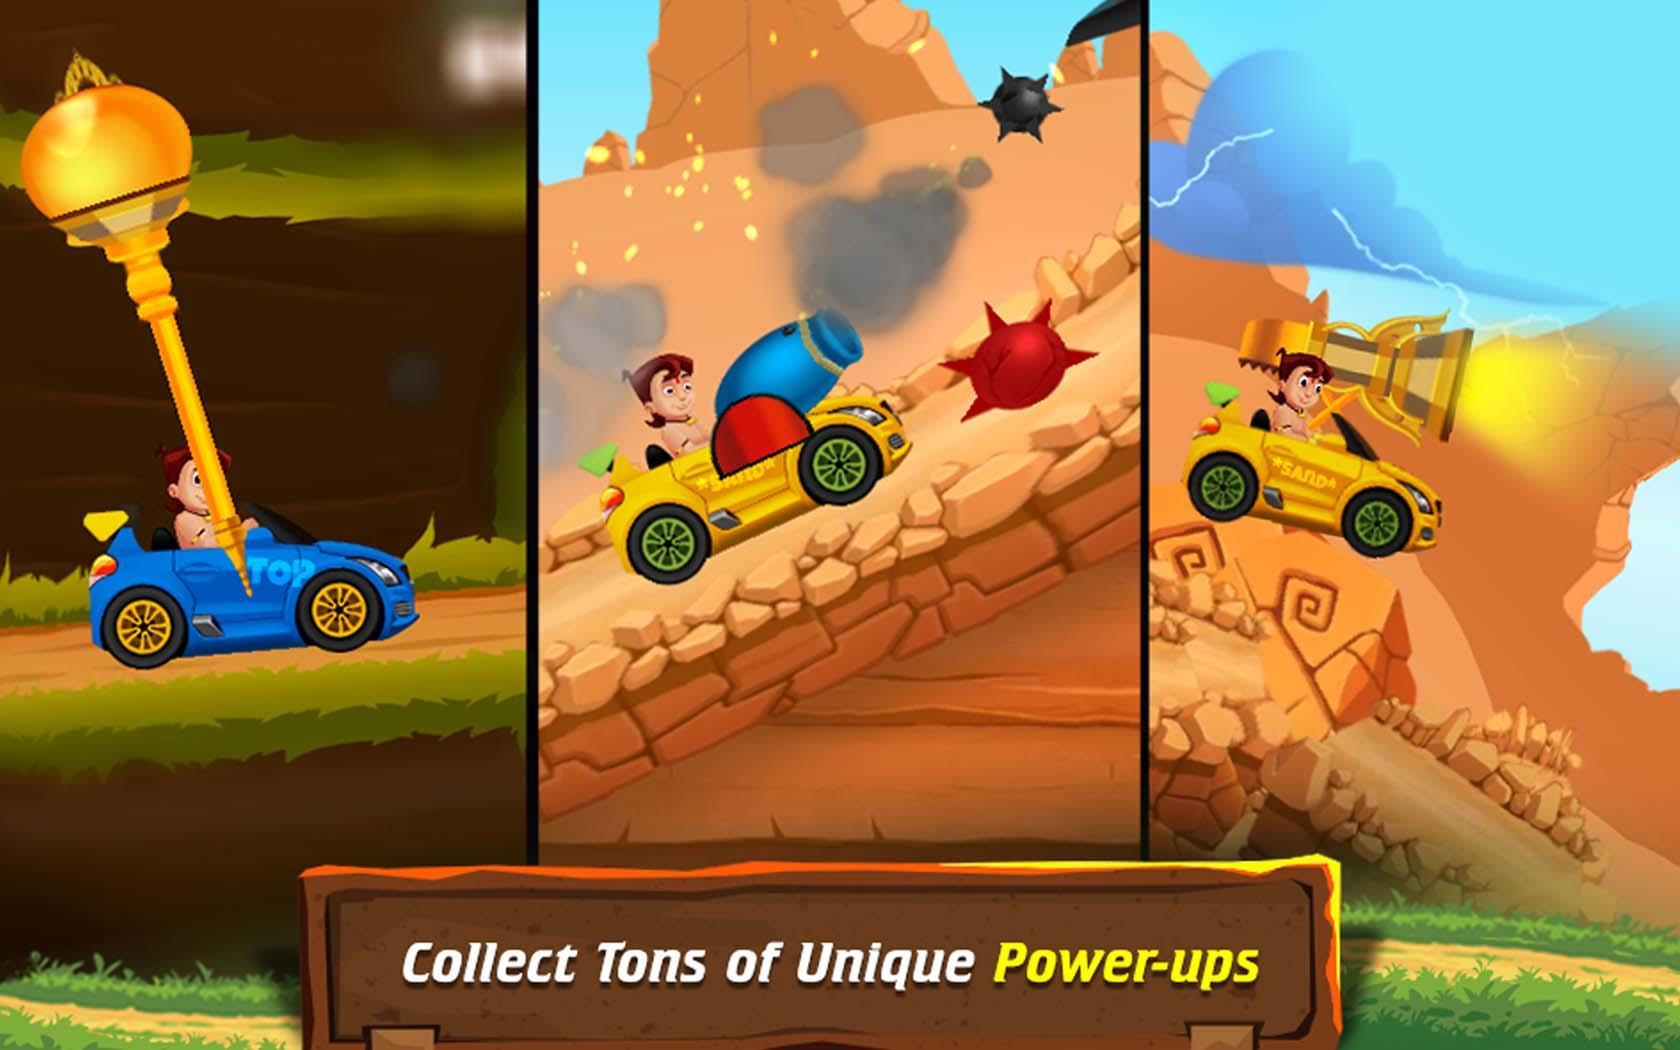 Cartoon Race: Chhota Bheem Speed Racing ภาพหน้าจอเกม